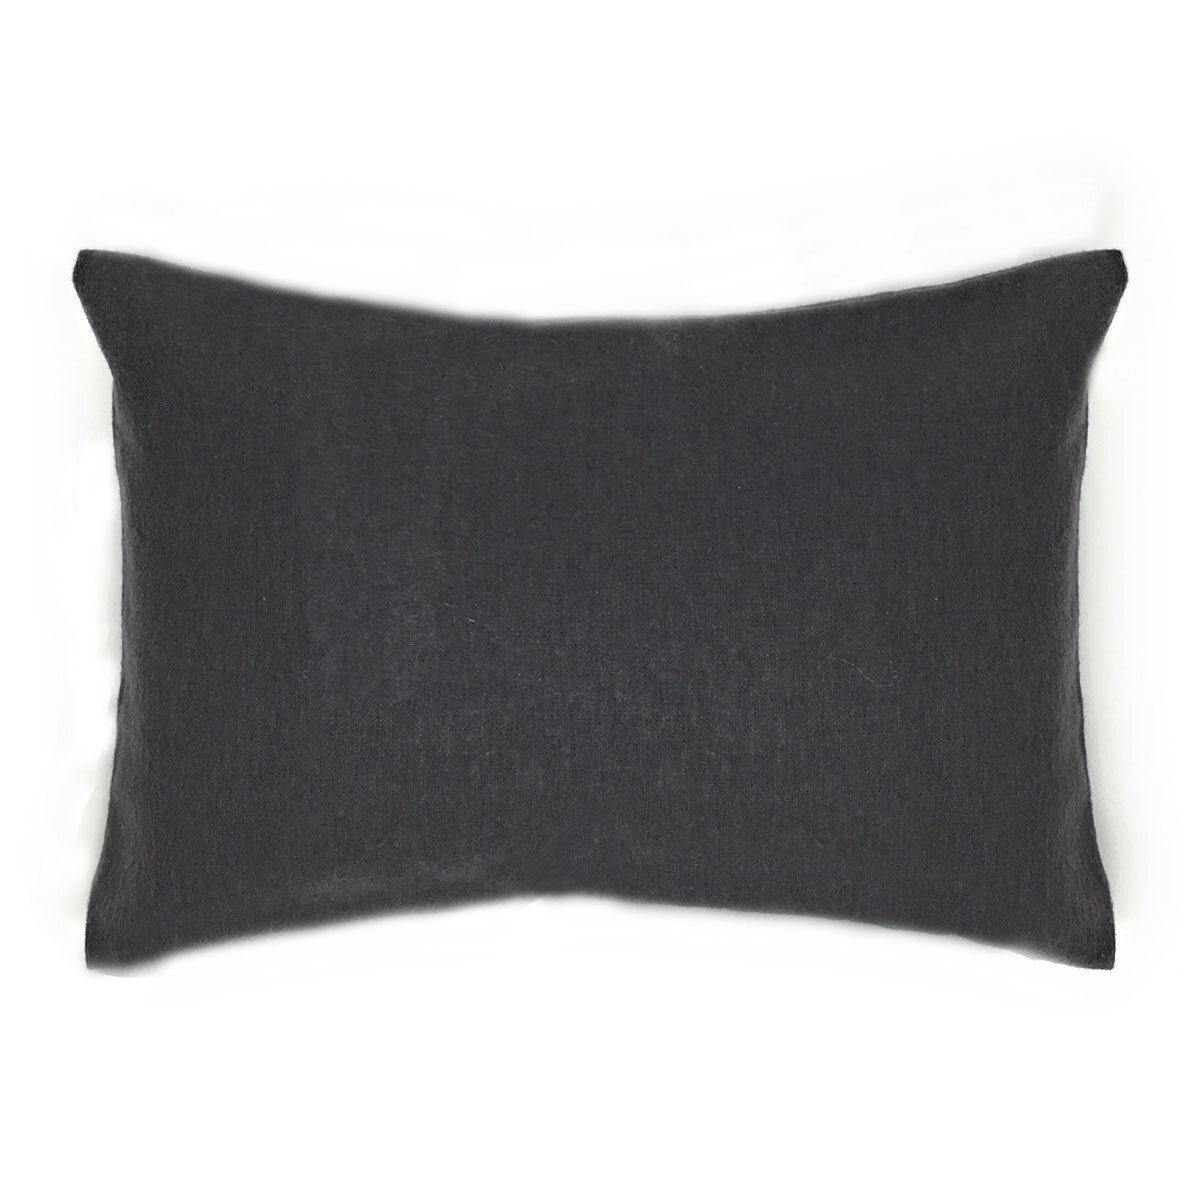 image of a single pillow using the charcoal snug bundle pillow case